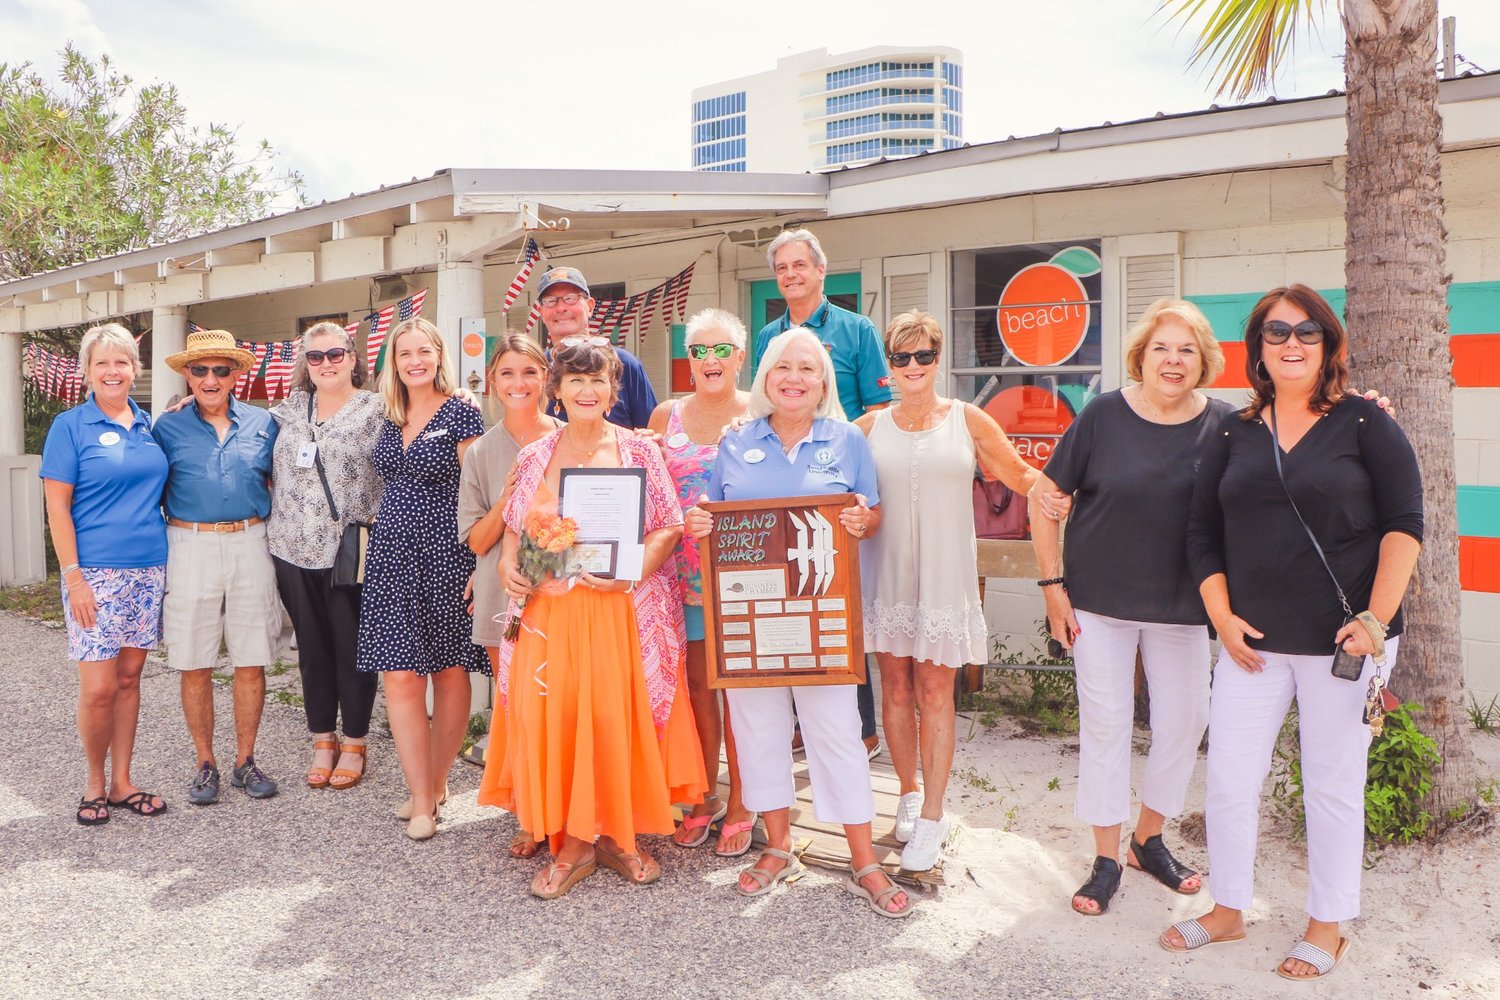 The July Island Spirit Award winner was Jamie Smith of The Orange Beach Store.